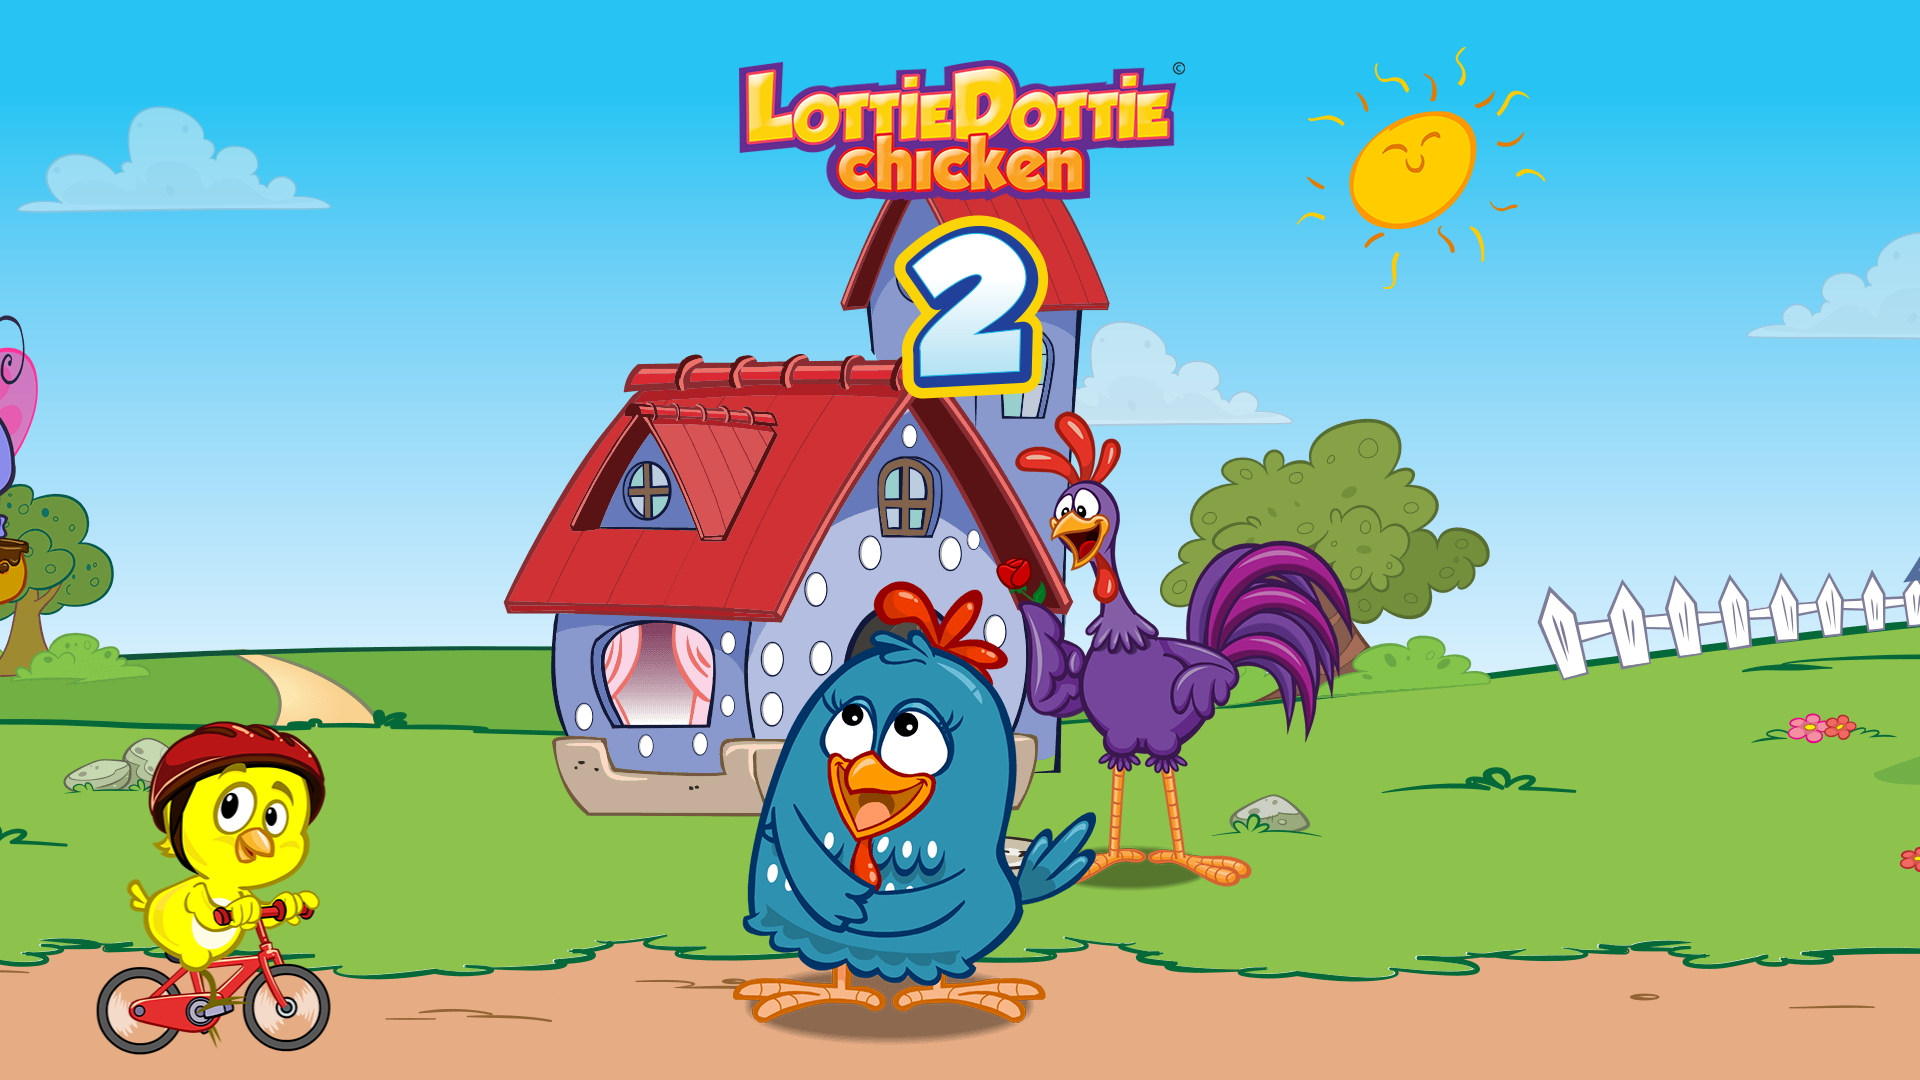 Lottie Dottie Mini's Game and Lottie Dottie's Game. Educational children's  game! 